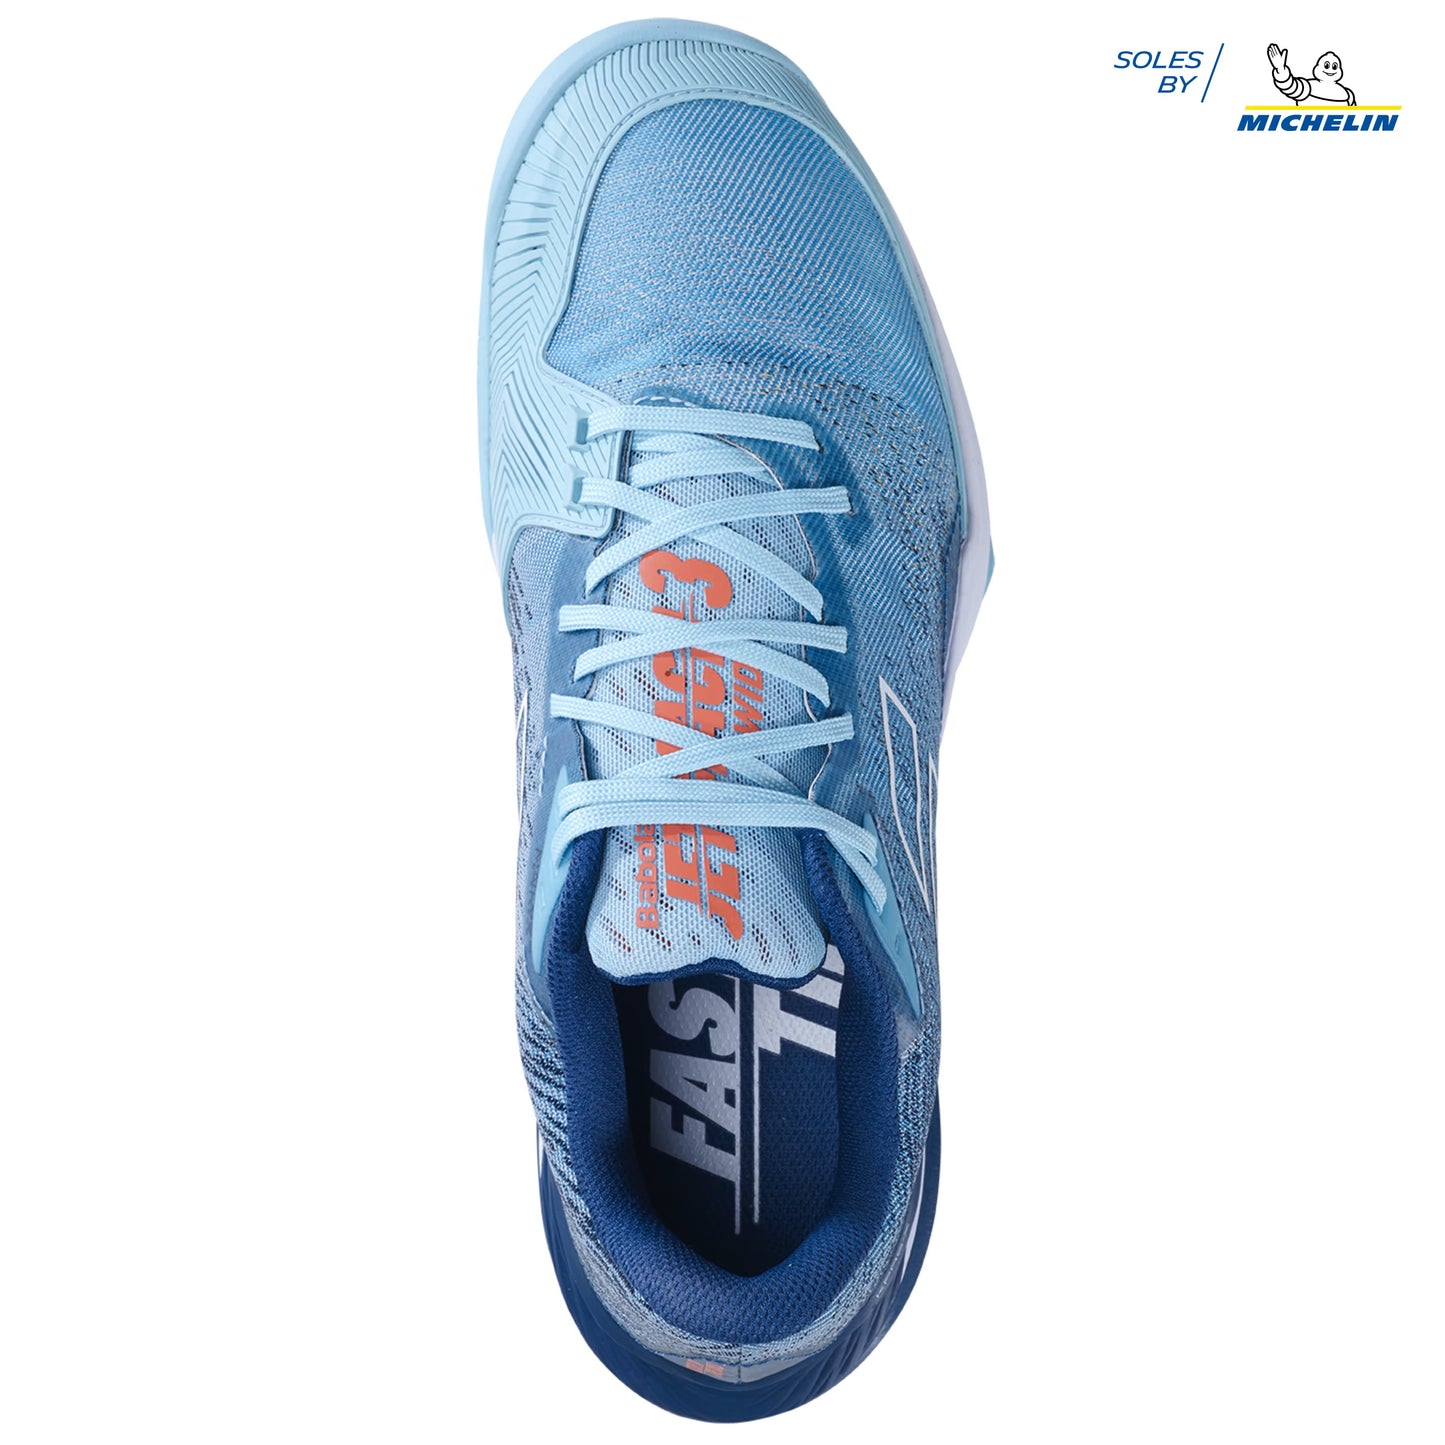 Babolat Jet Mach 3 Angel Blue wide men tennis shoes